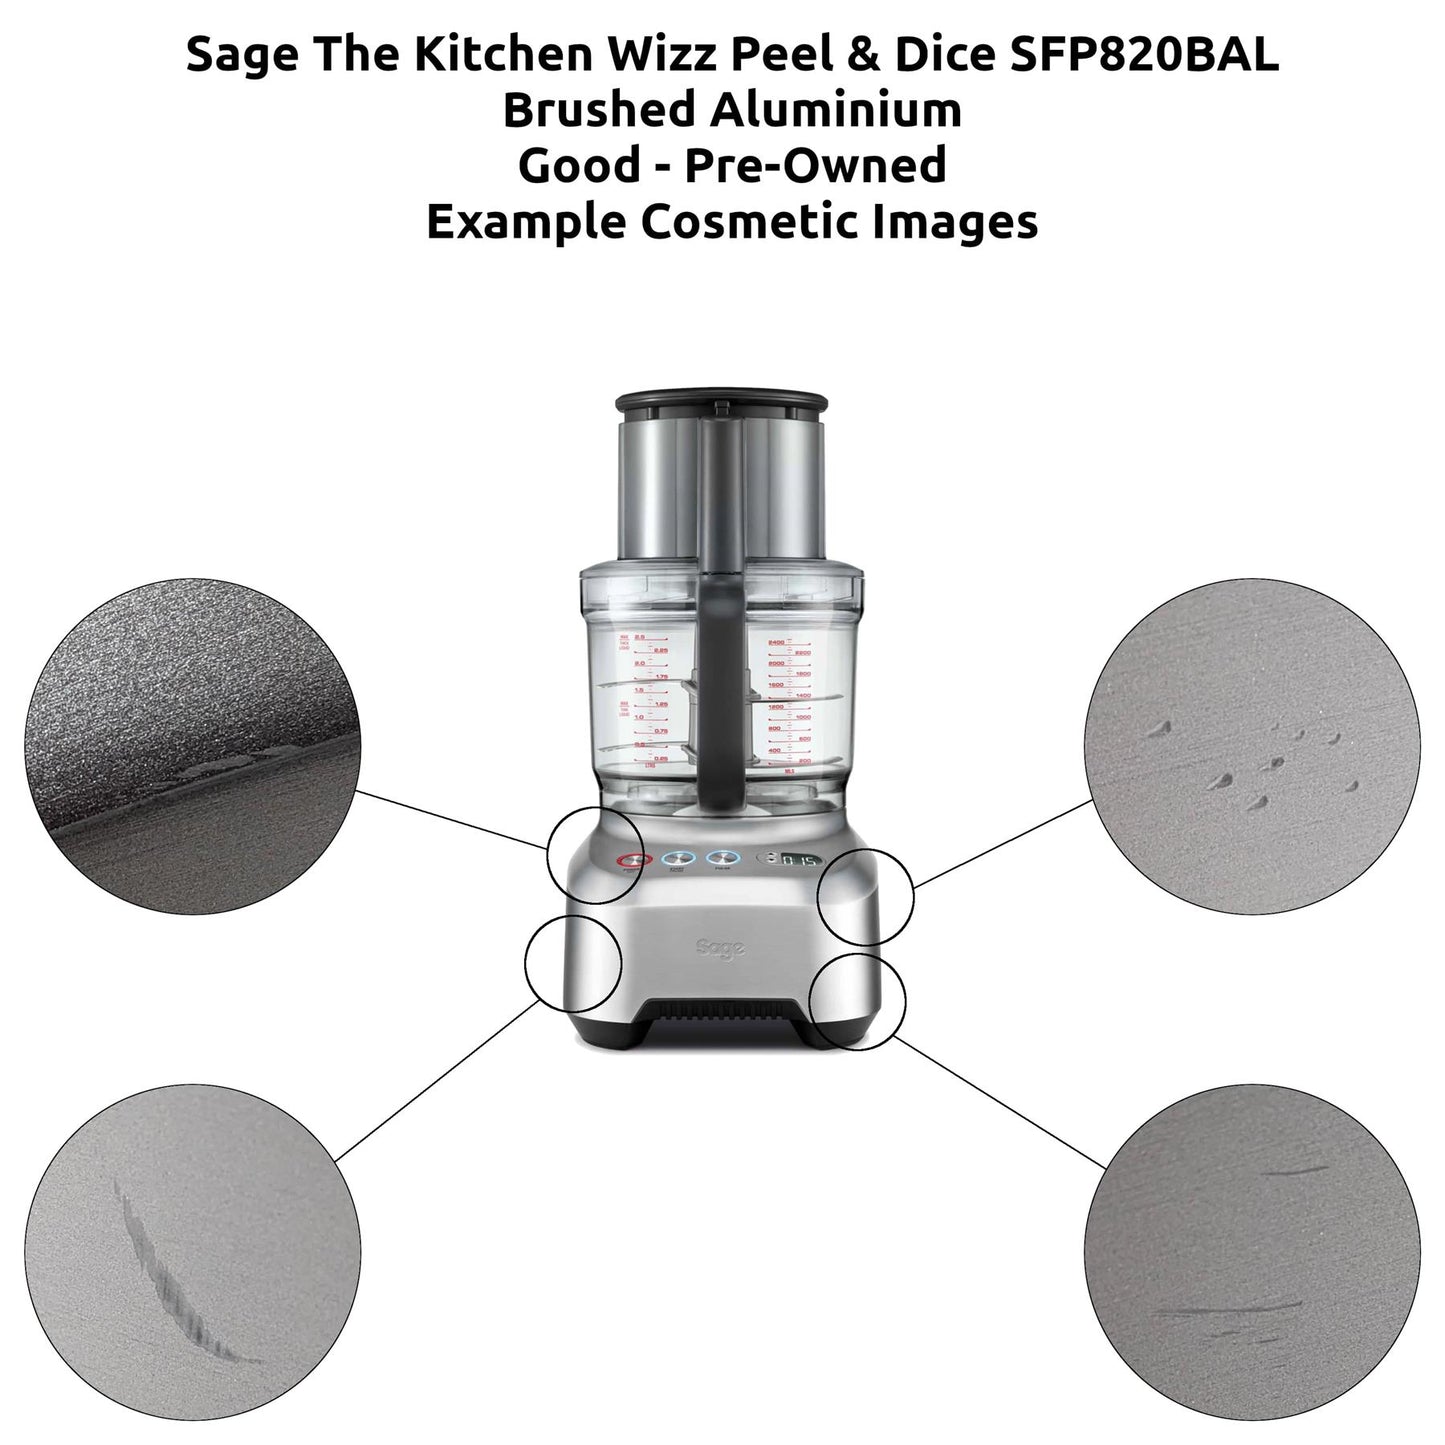 Sage The Kitchen Wizz Peel & Dice SFP820 Food Processor